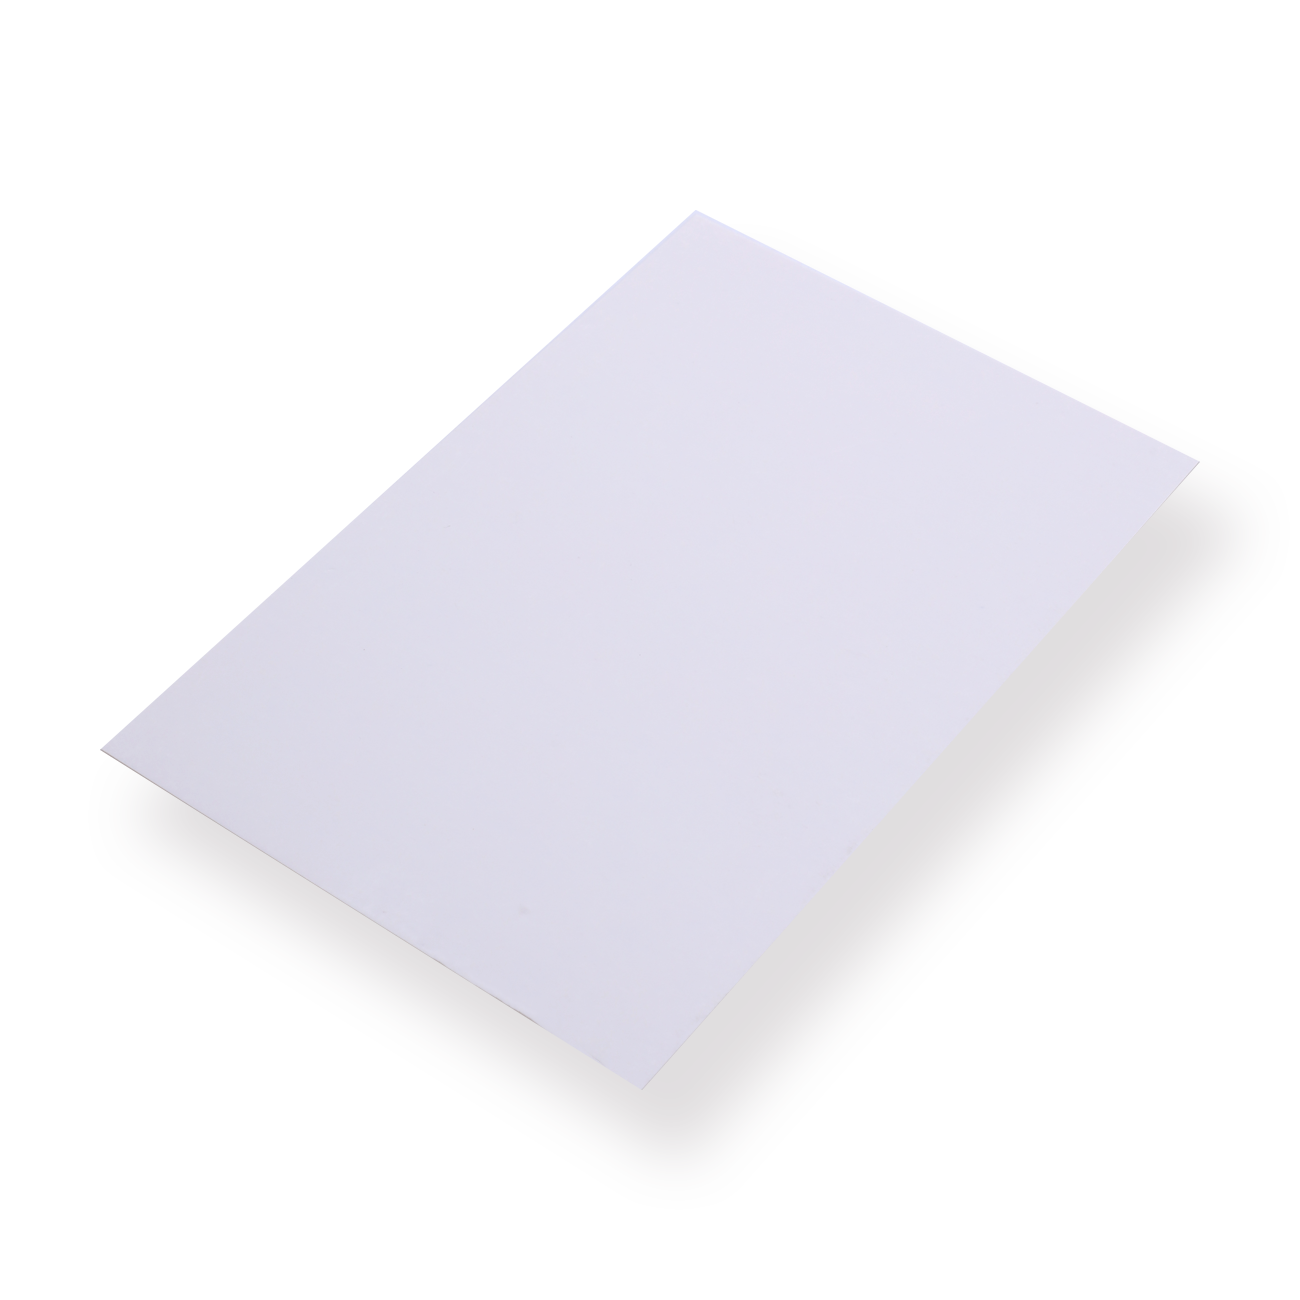 Blank Card - White